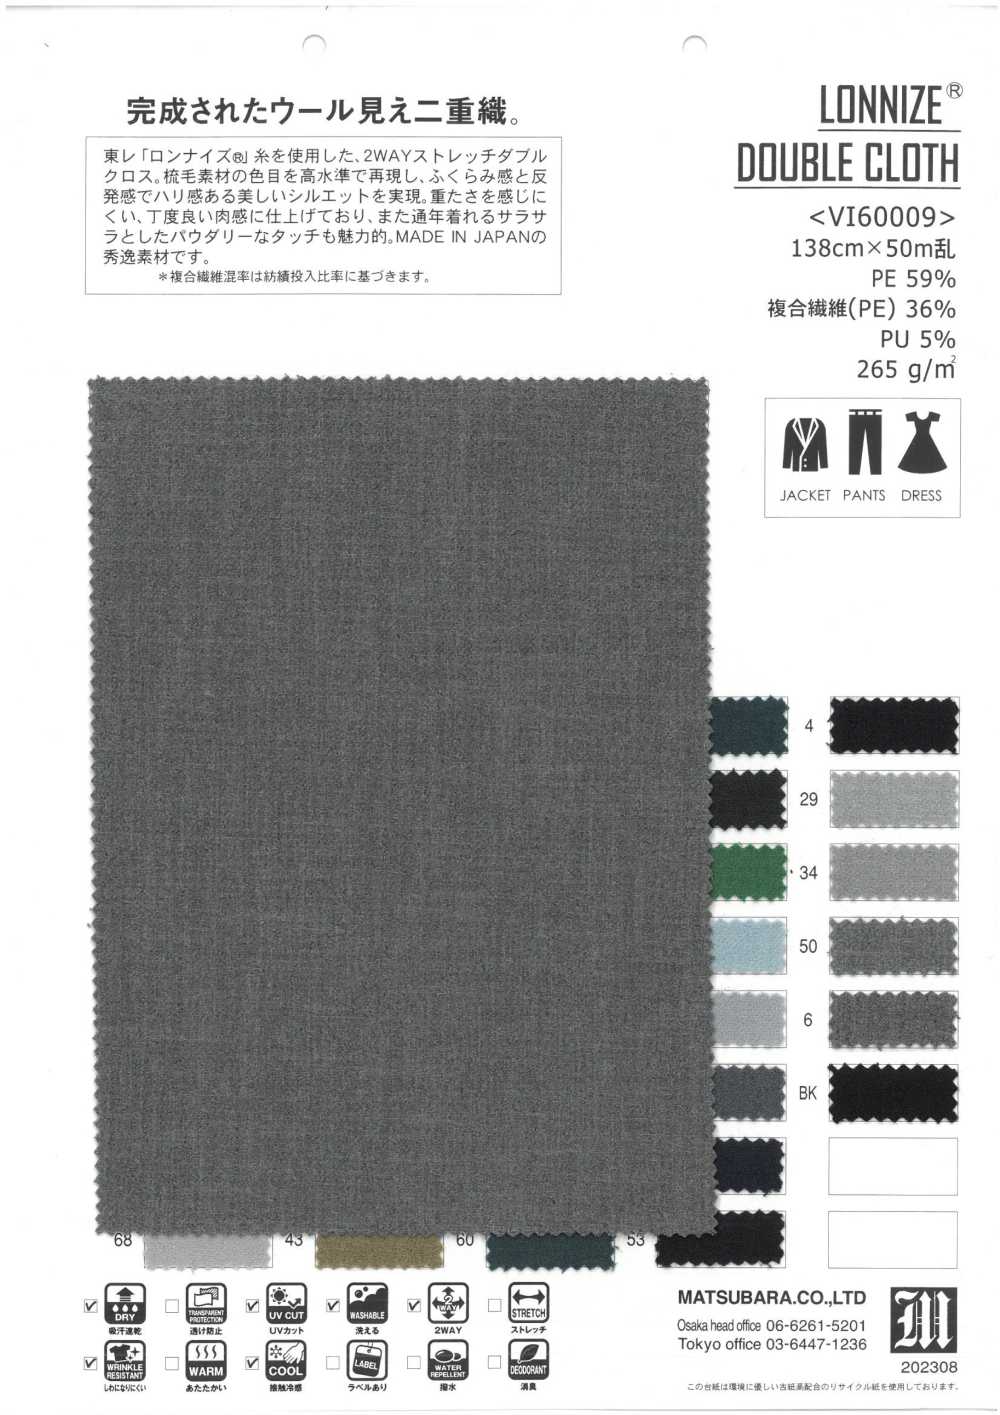 VI60009 PAÑO DOBLE LONNIZE®[Fabrica Textil] Matsubara